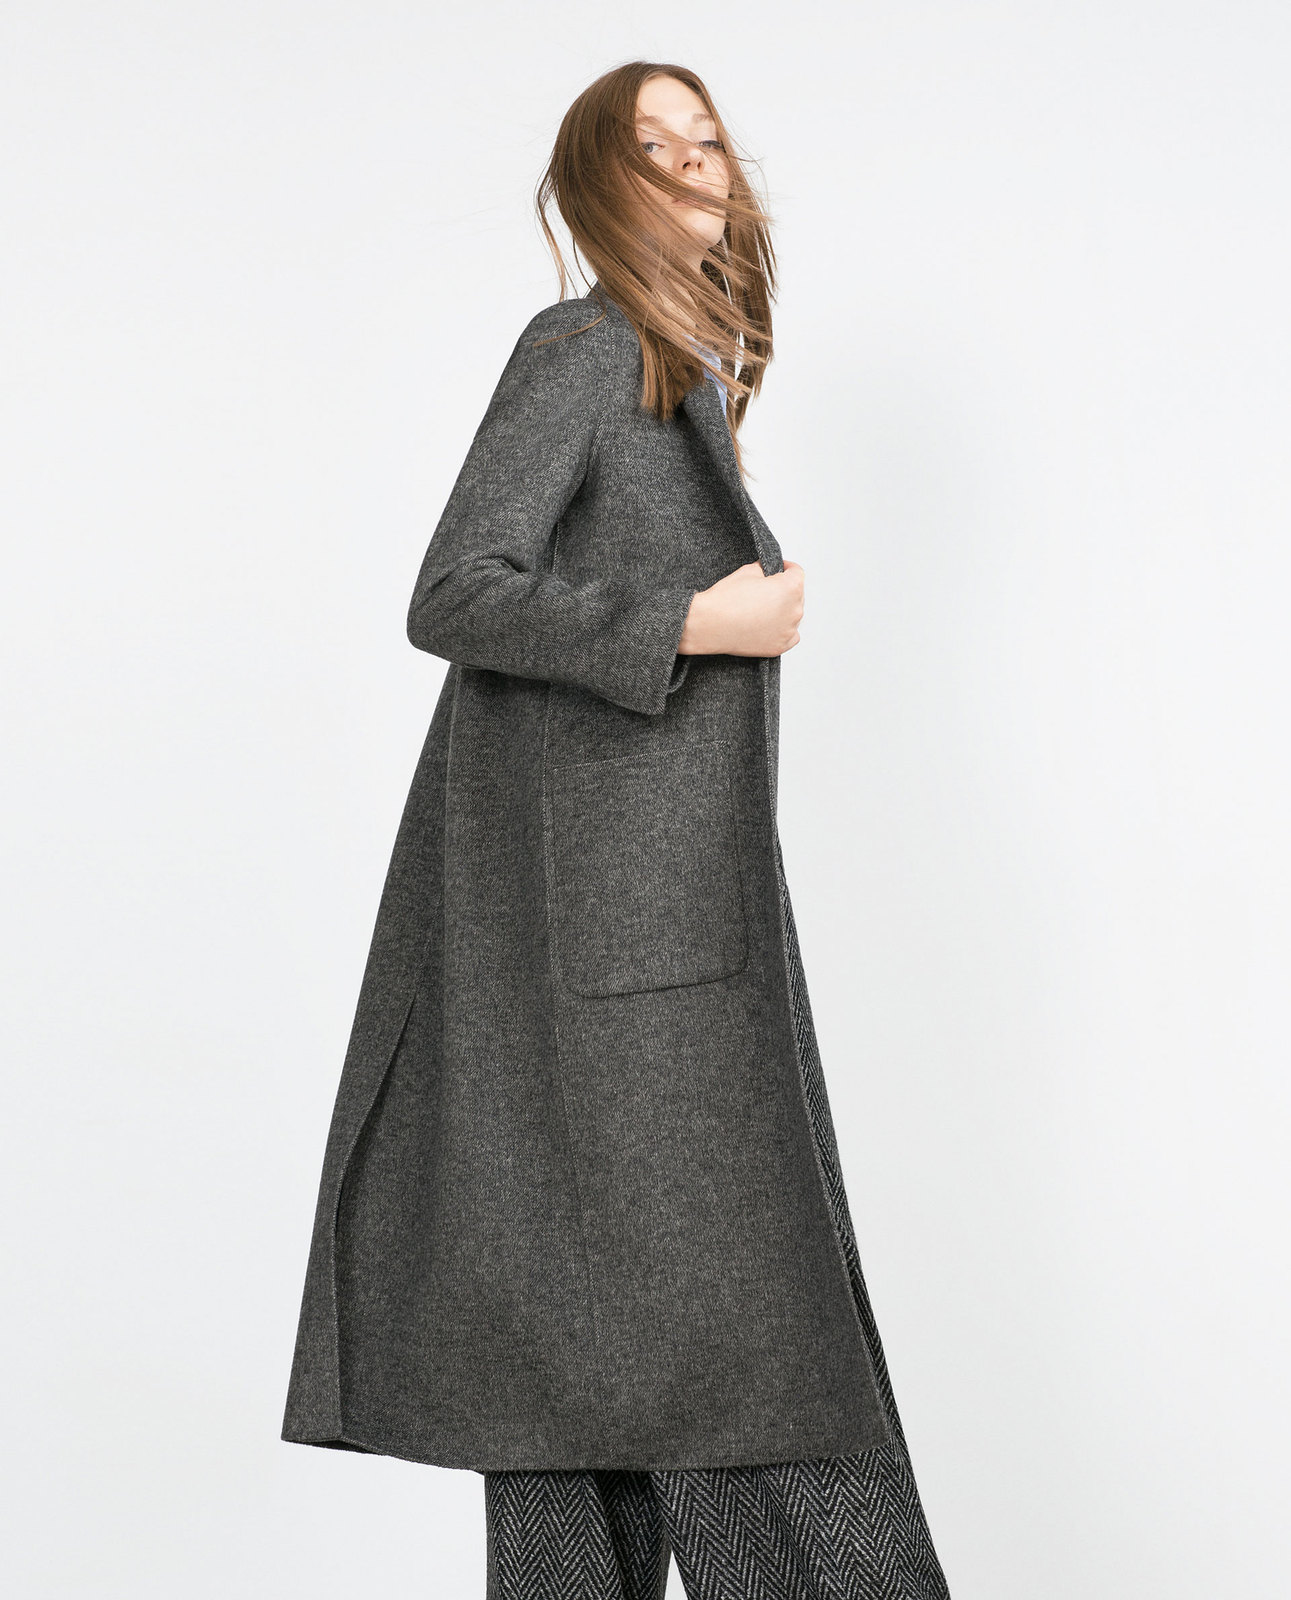 Zara handmade hosszú női akbát 2015.10.15 #88696 fotója